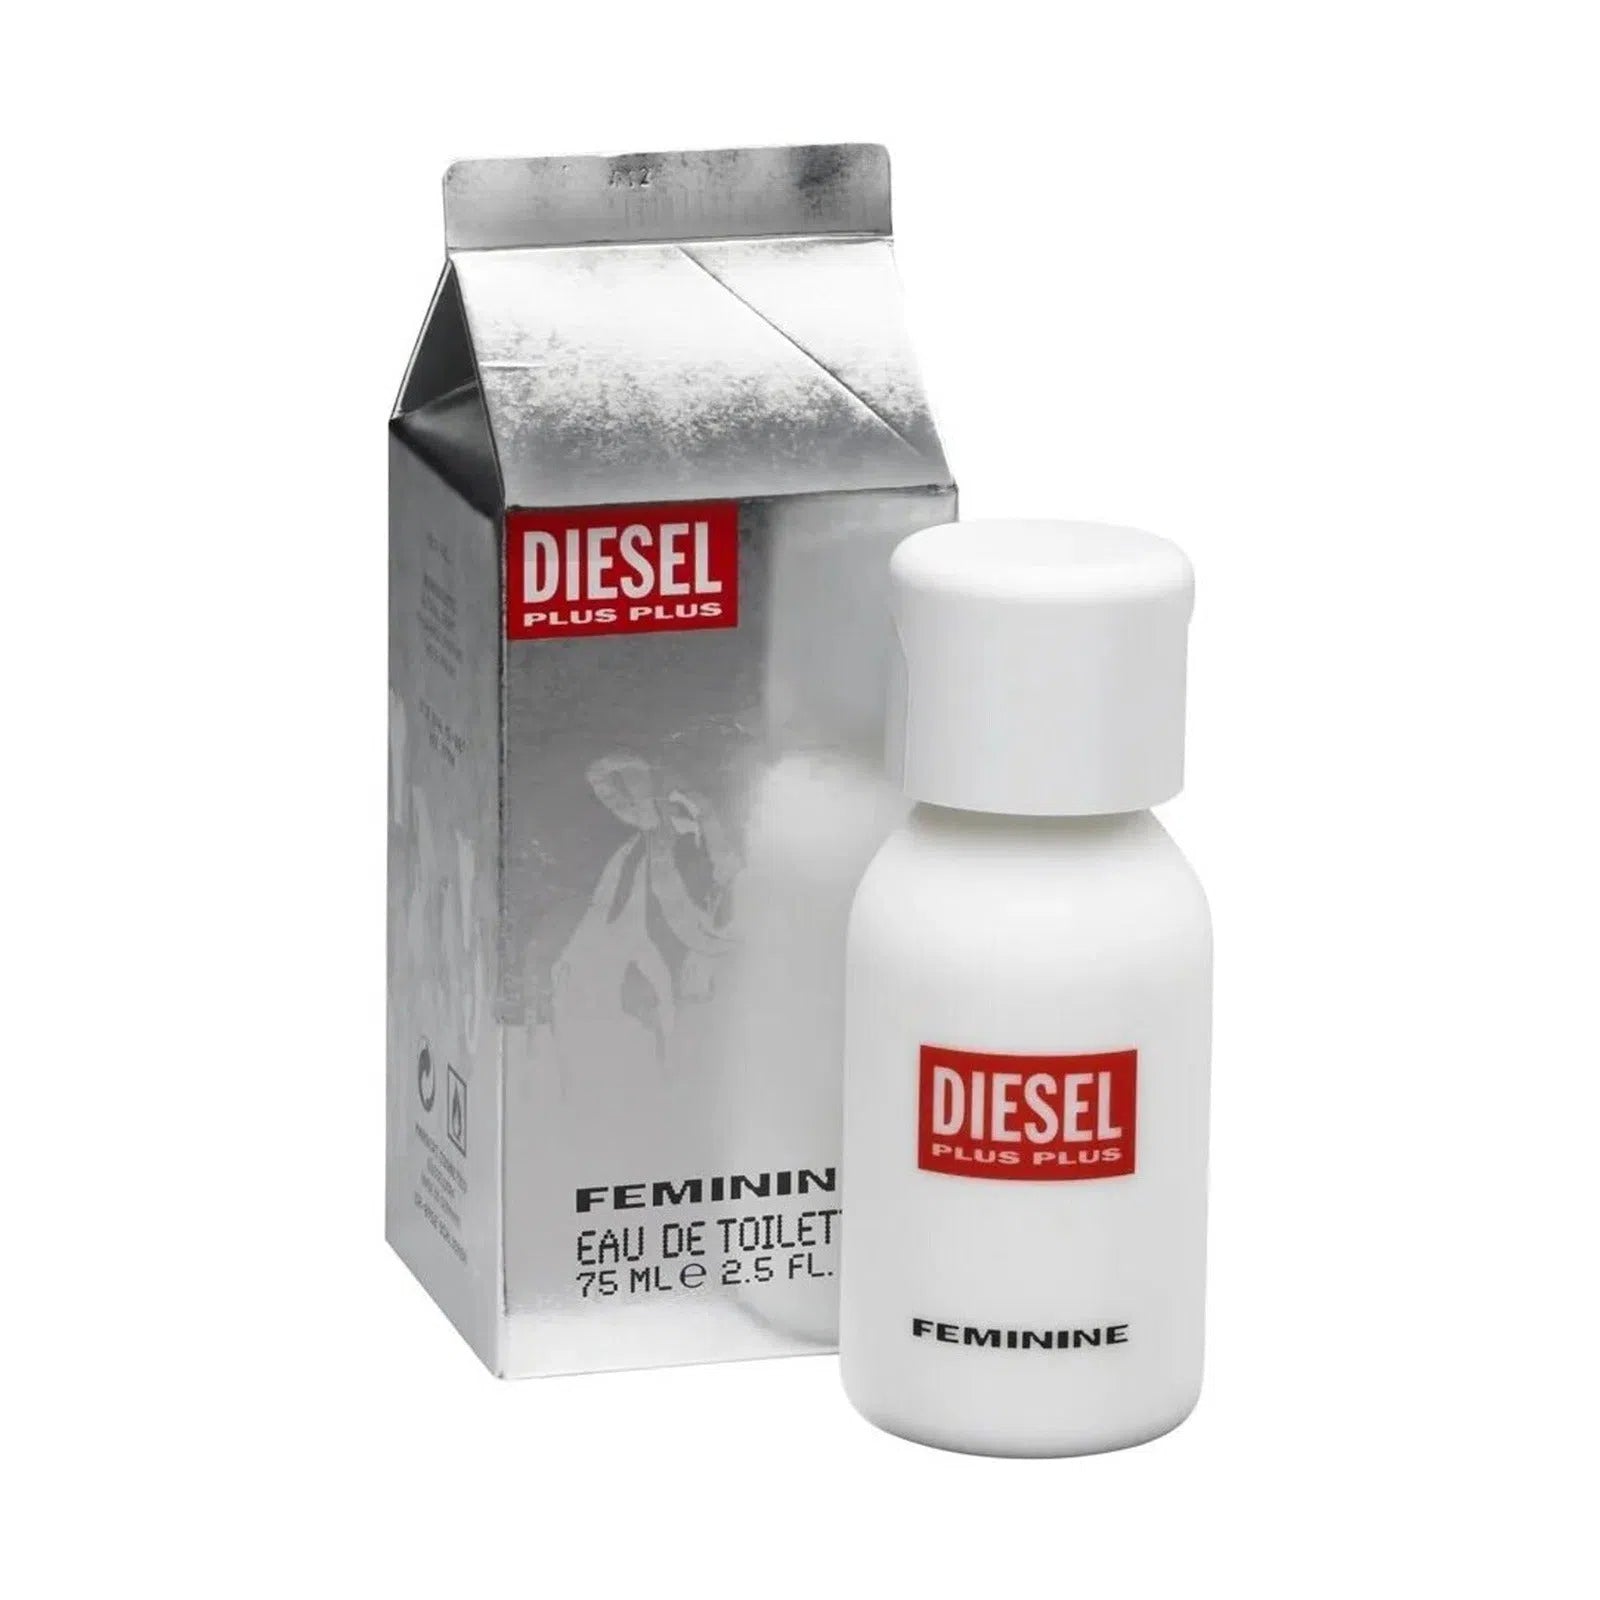 Perfume Diesel Plus Plus Feminine EDT (W) / 75 ml - 4085400191509- Prive Perfumes Honduras